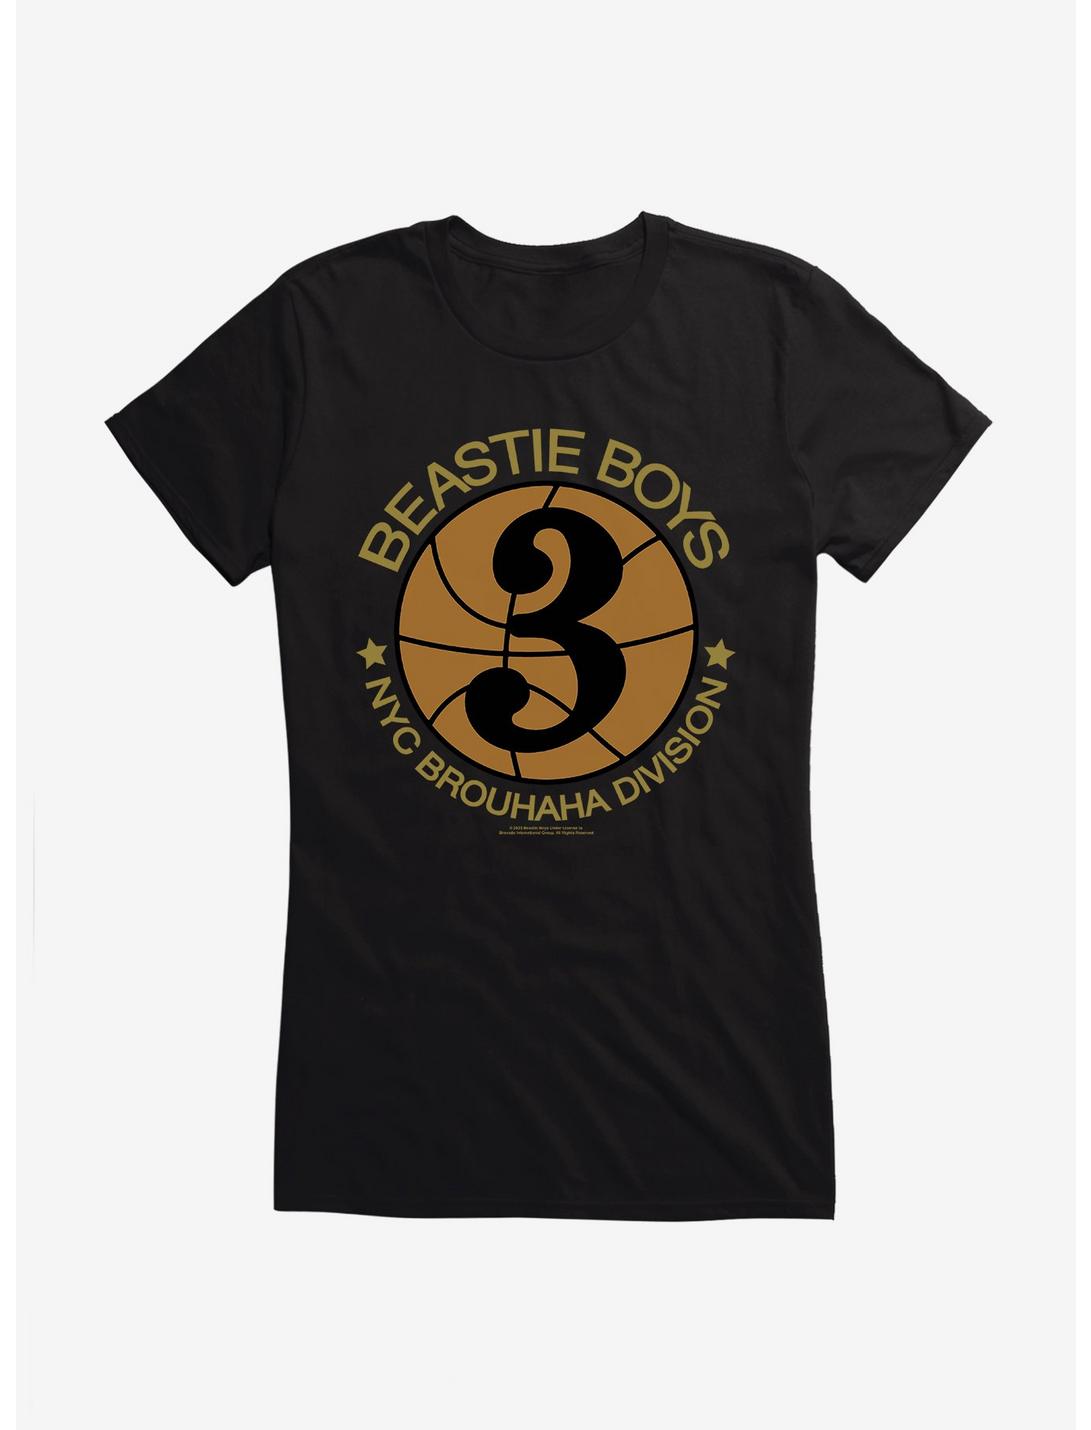 Beastie Boys NYC Brouhaha Division Girls T-Shirt, BLACK, hi-res